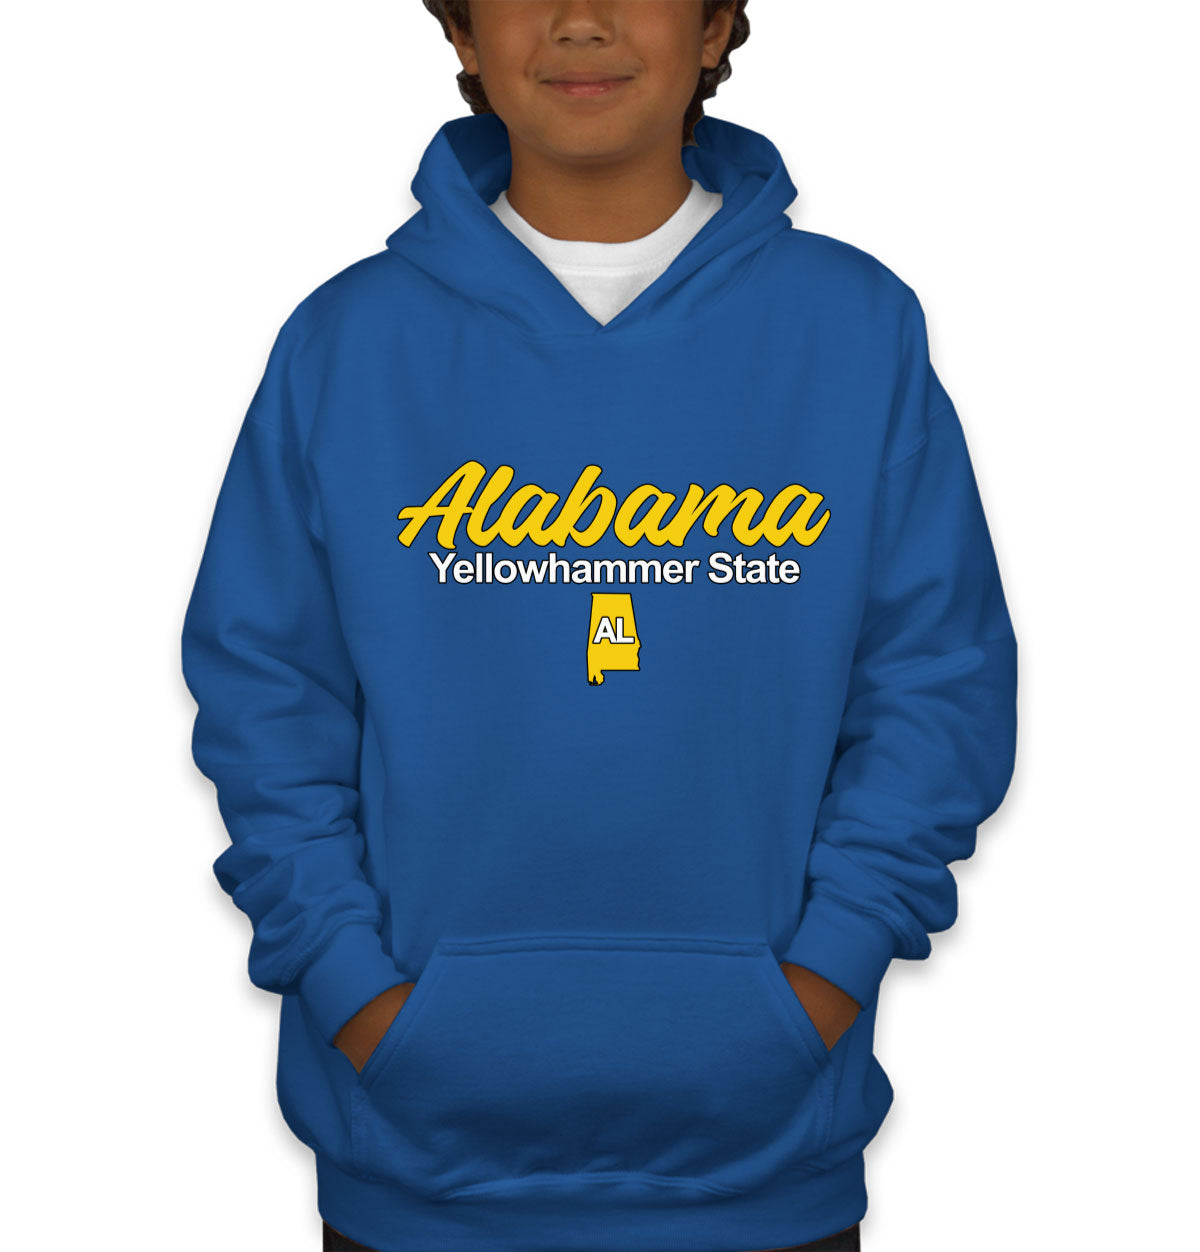 Alabama Yellowhammer State Youth Hoodie